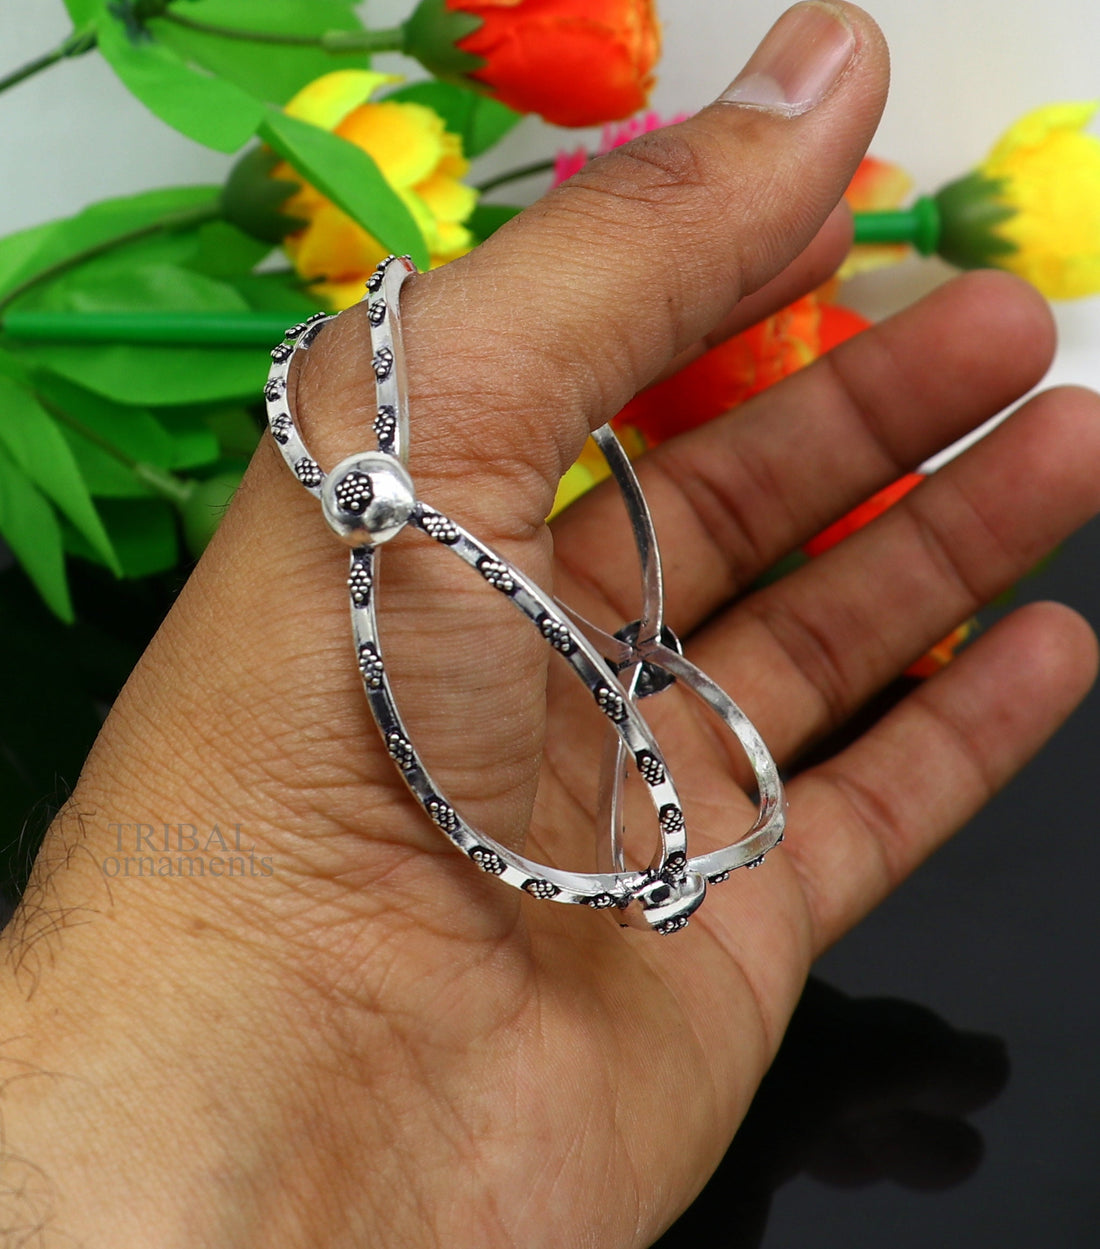 925 sterling silver handmade fabulous bangle bracelet kada gorgeous customized bride belly dance customized jewelry best gift jewelry ba140 - TRIBAL ORNAMENTS